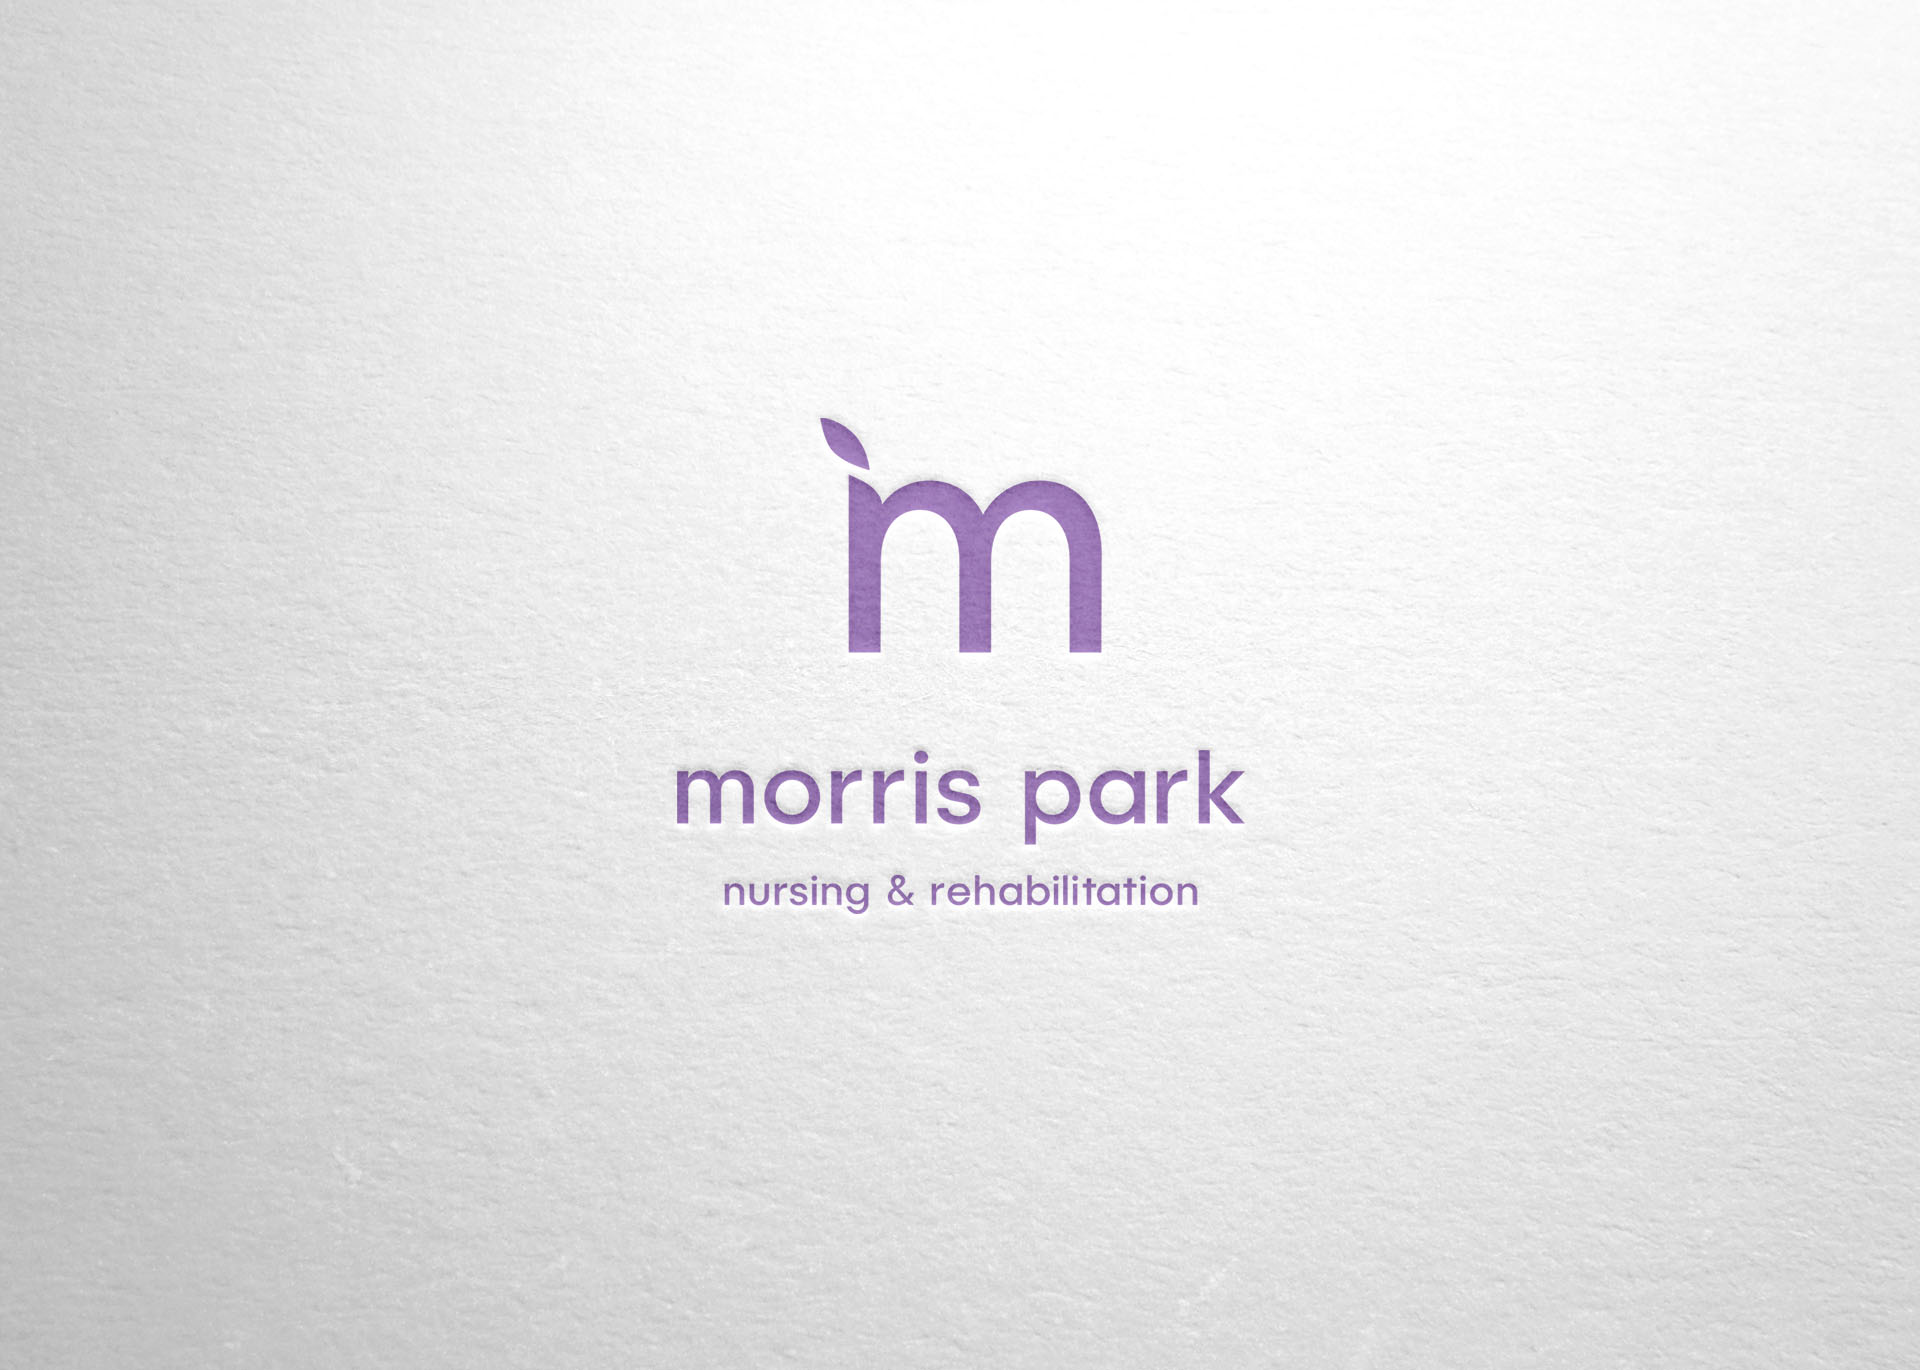 MorrisPark_1 new a